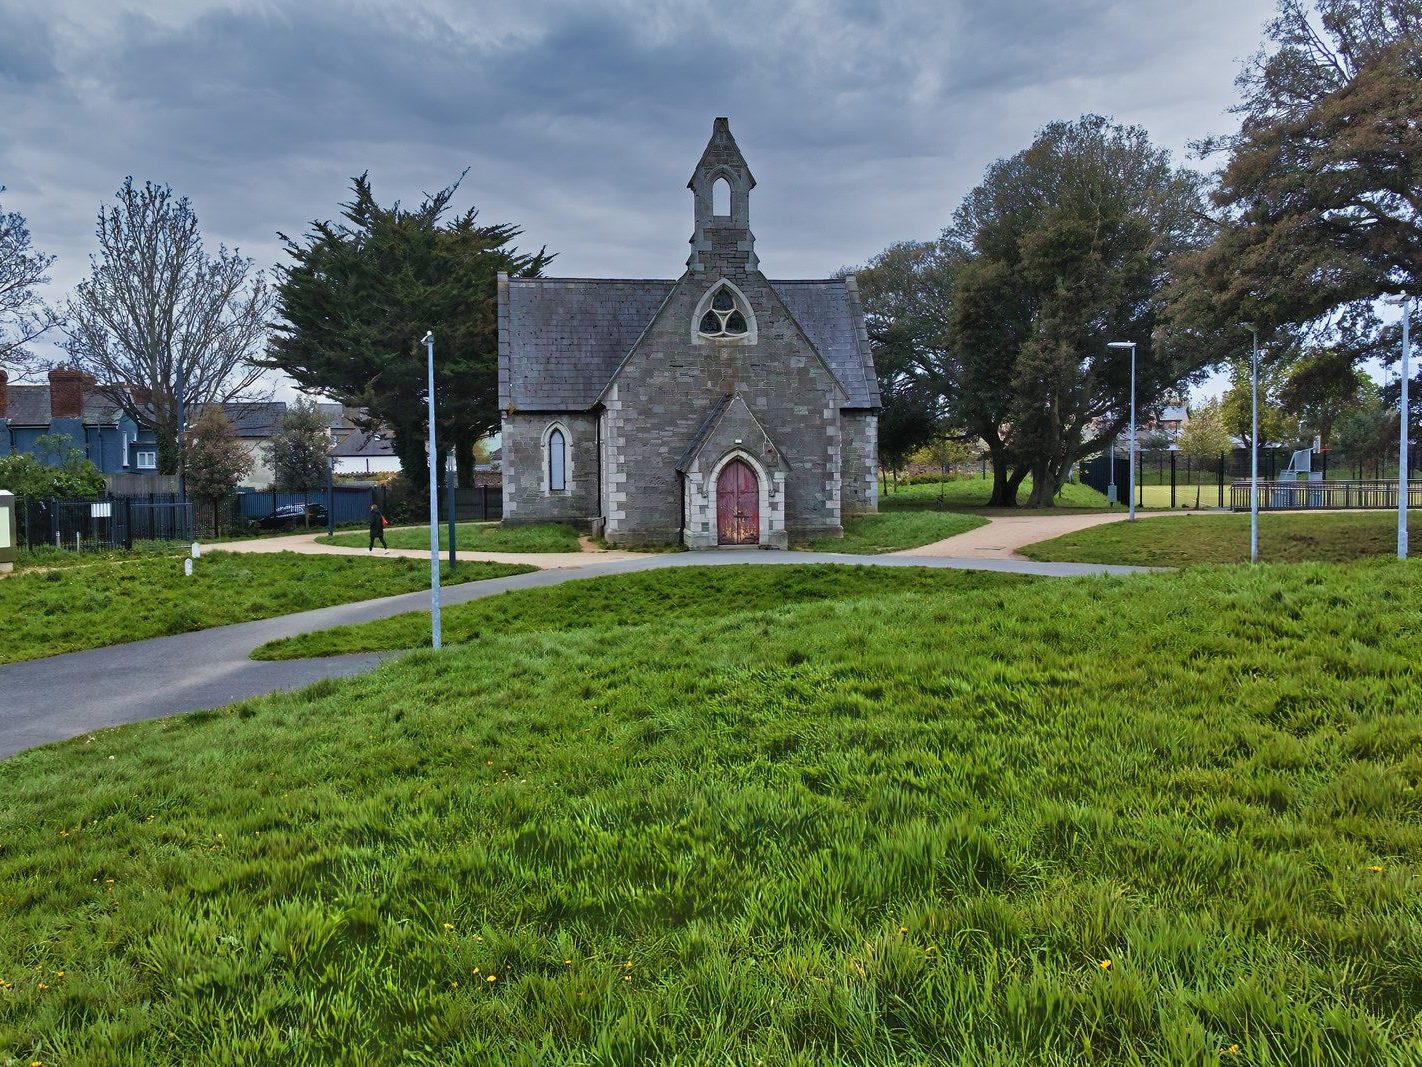 UNUSED CHURCH OF IRELAND CHURCH ON THE NEW TU GRANGEGORMAN CAMPUS 001